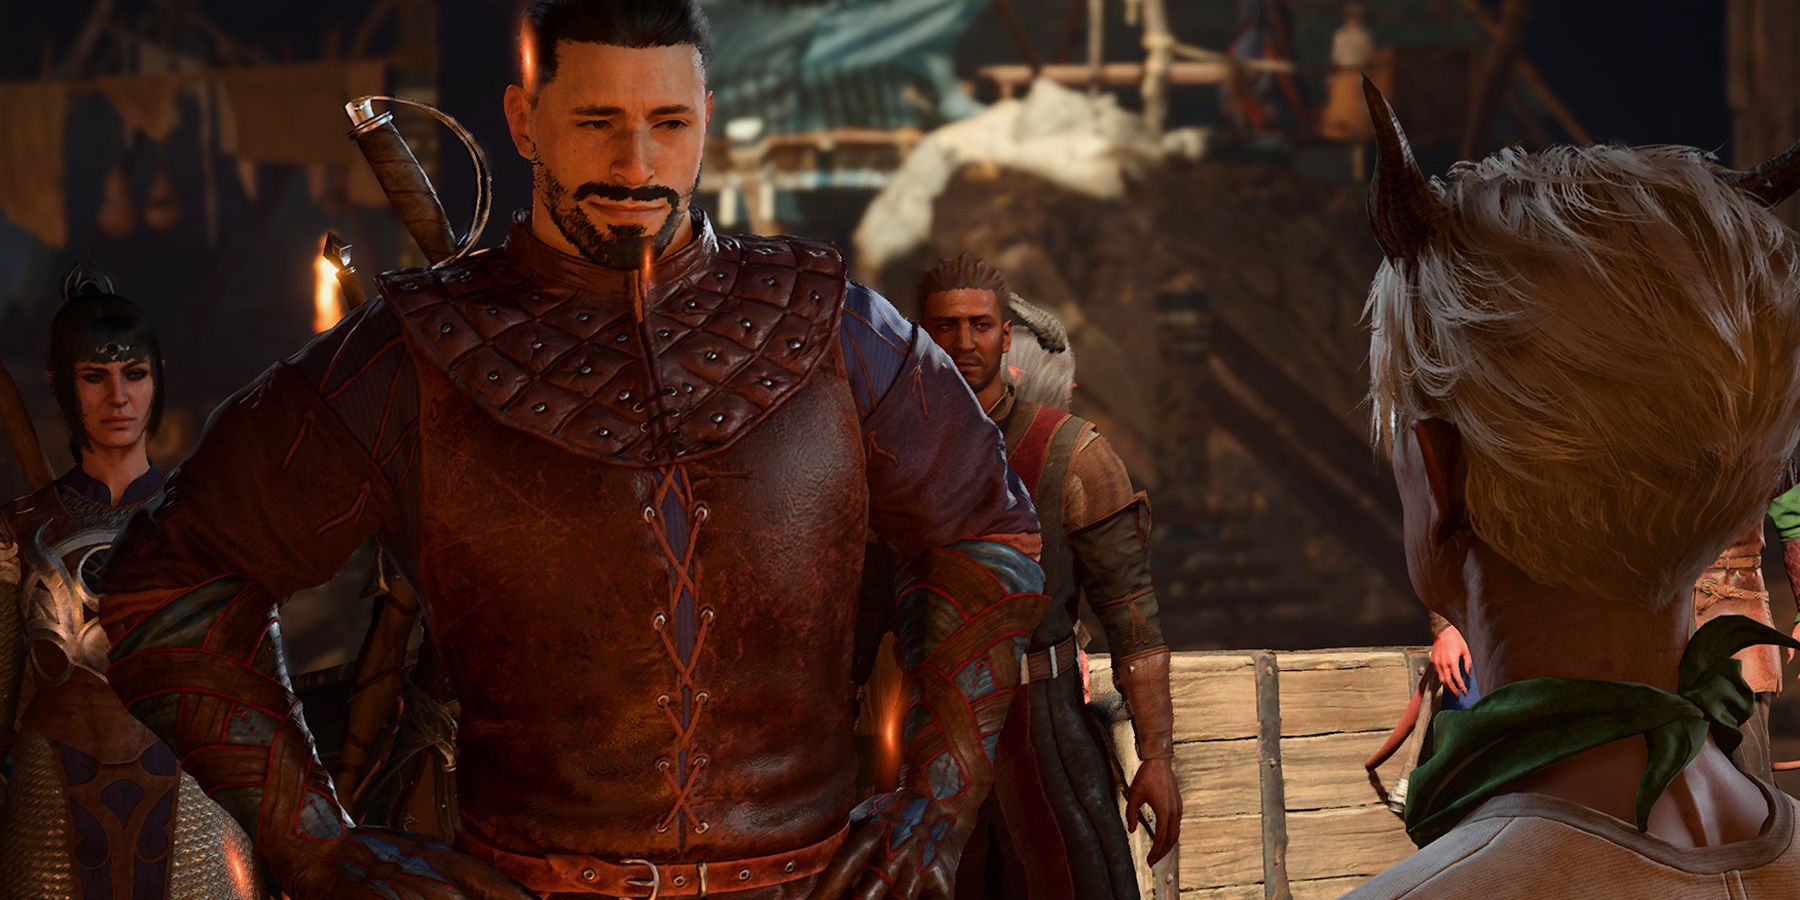 Baldur's Gate 3 protagonist standing proudly during dialogue cutscene